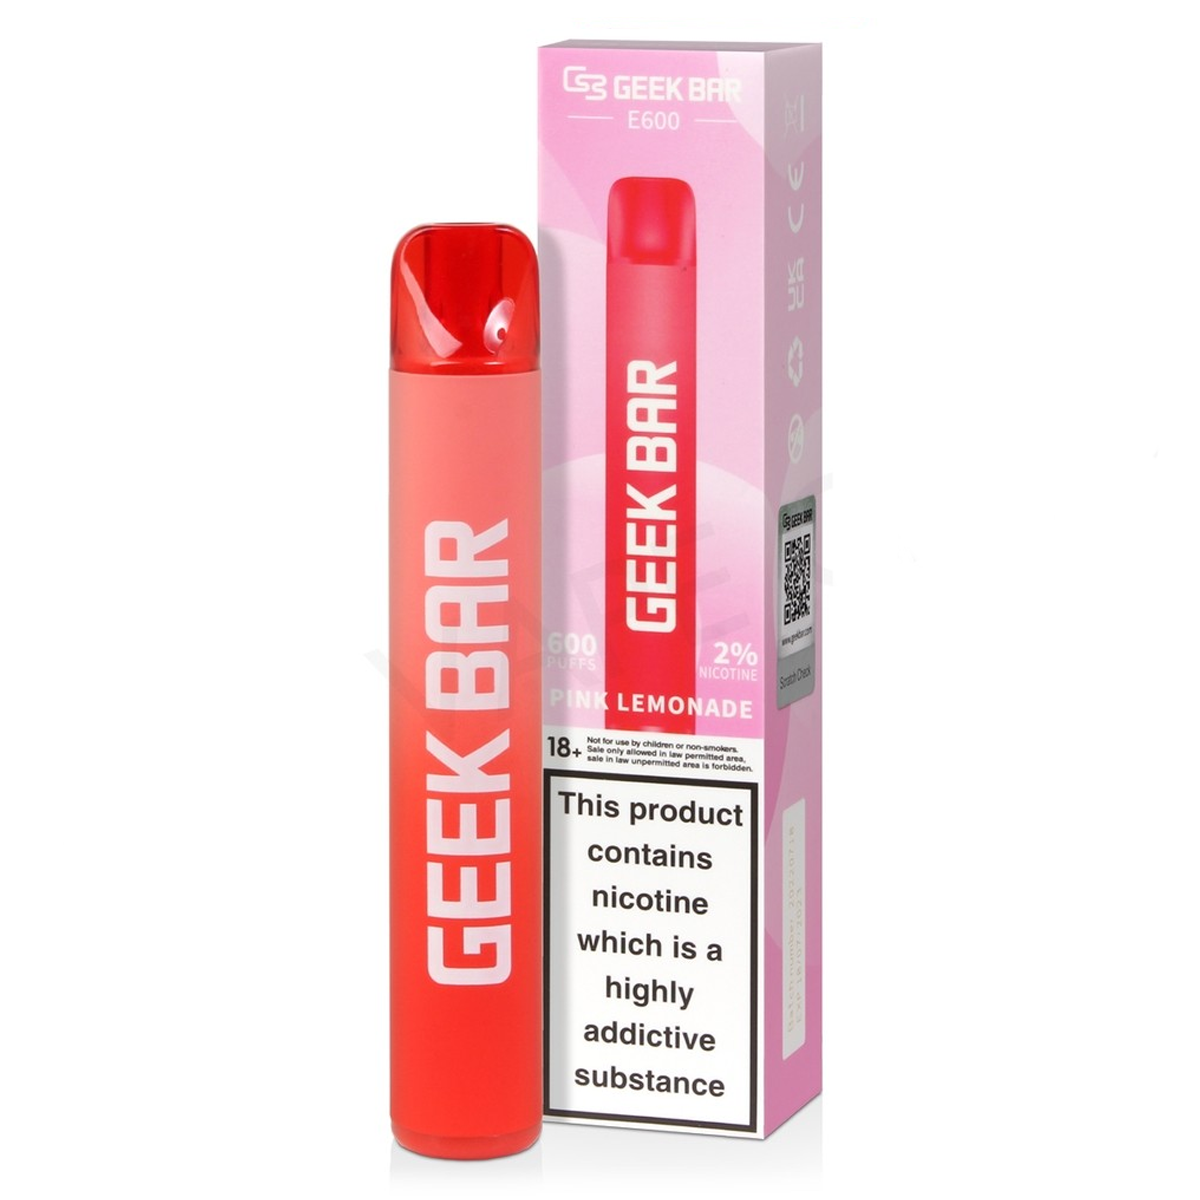 Geekbar E600 - Pink Lemonade 20mg